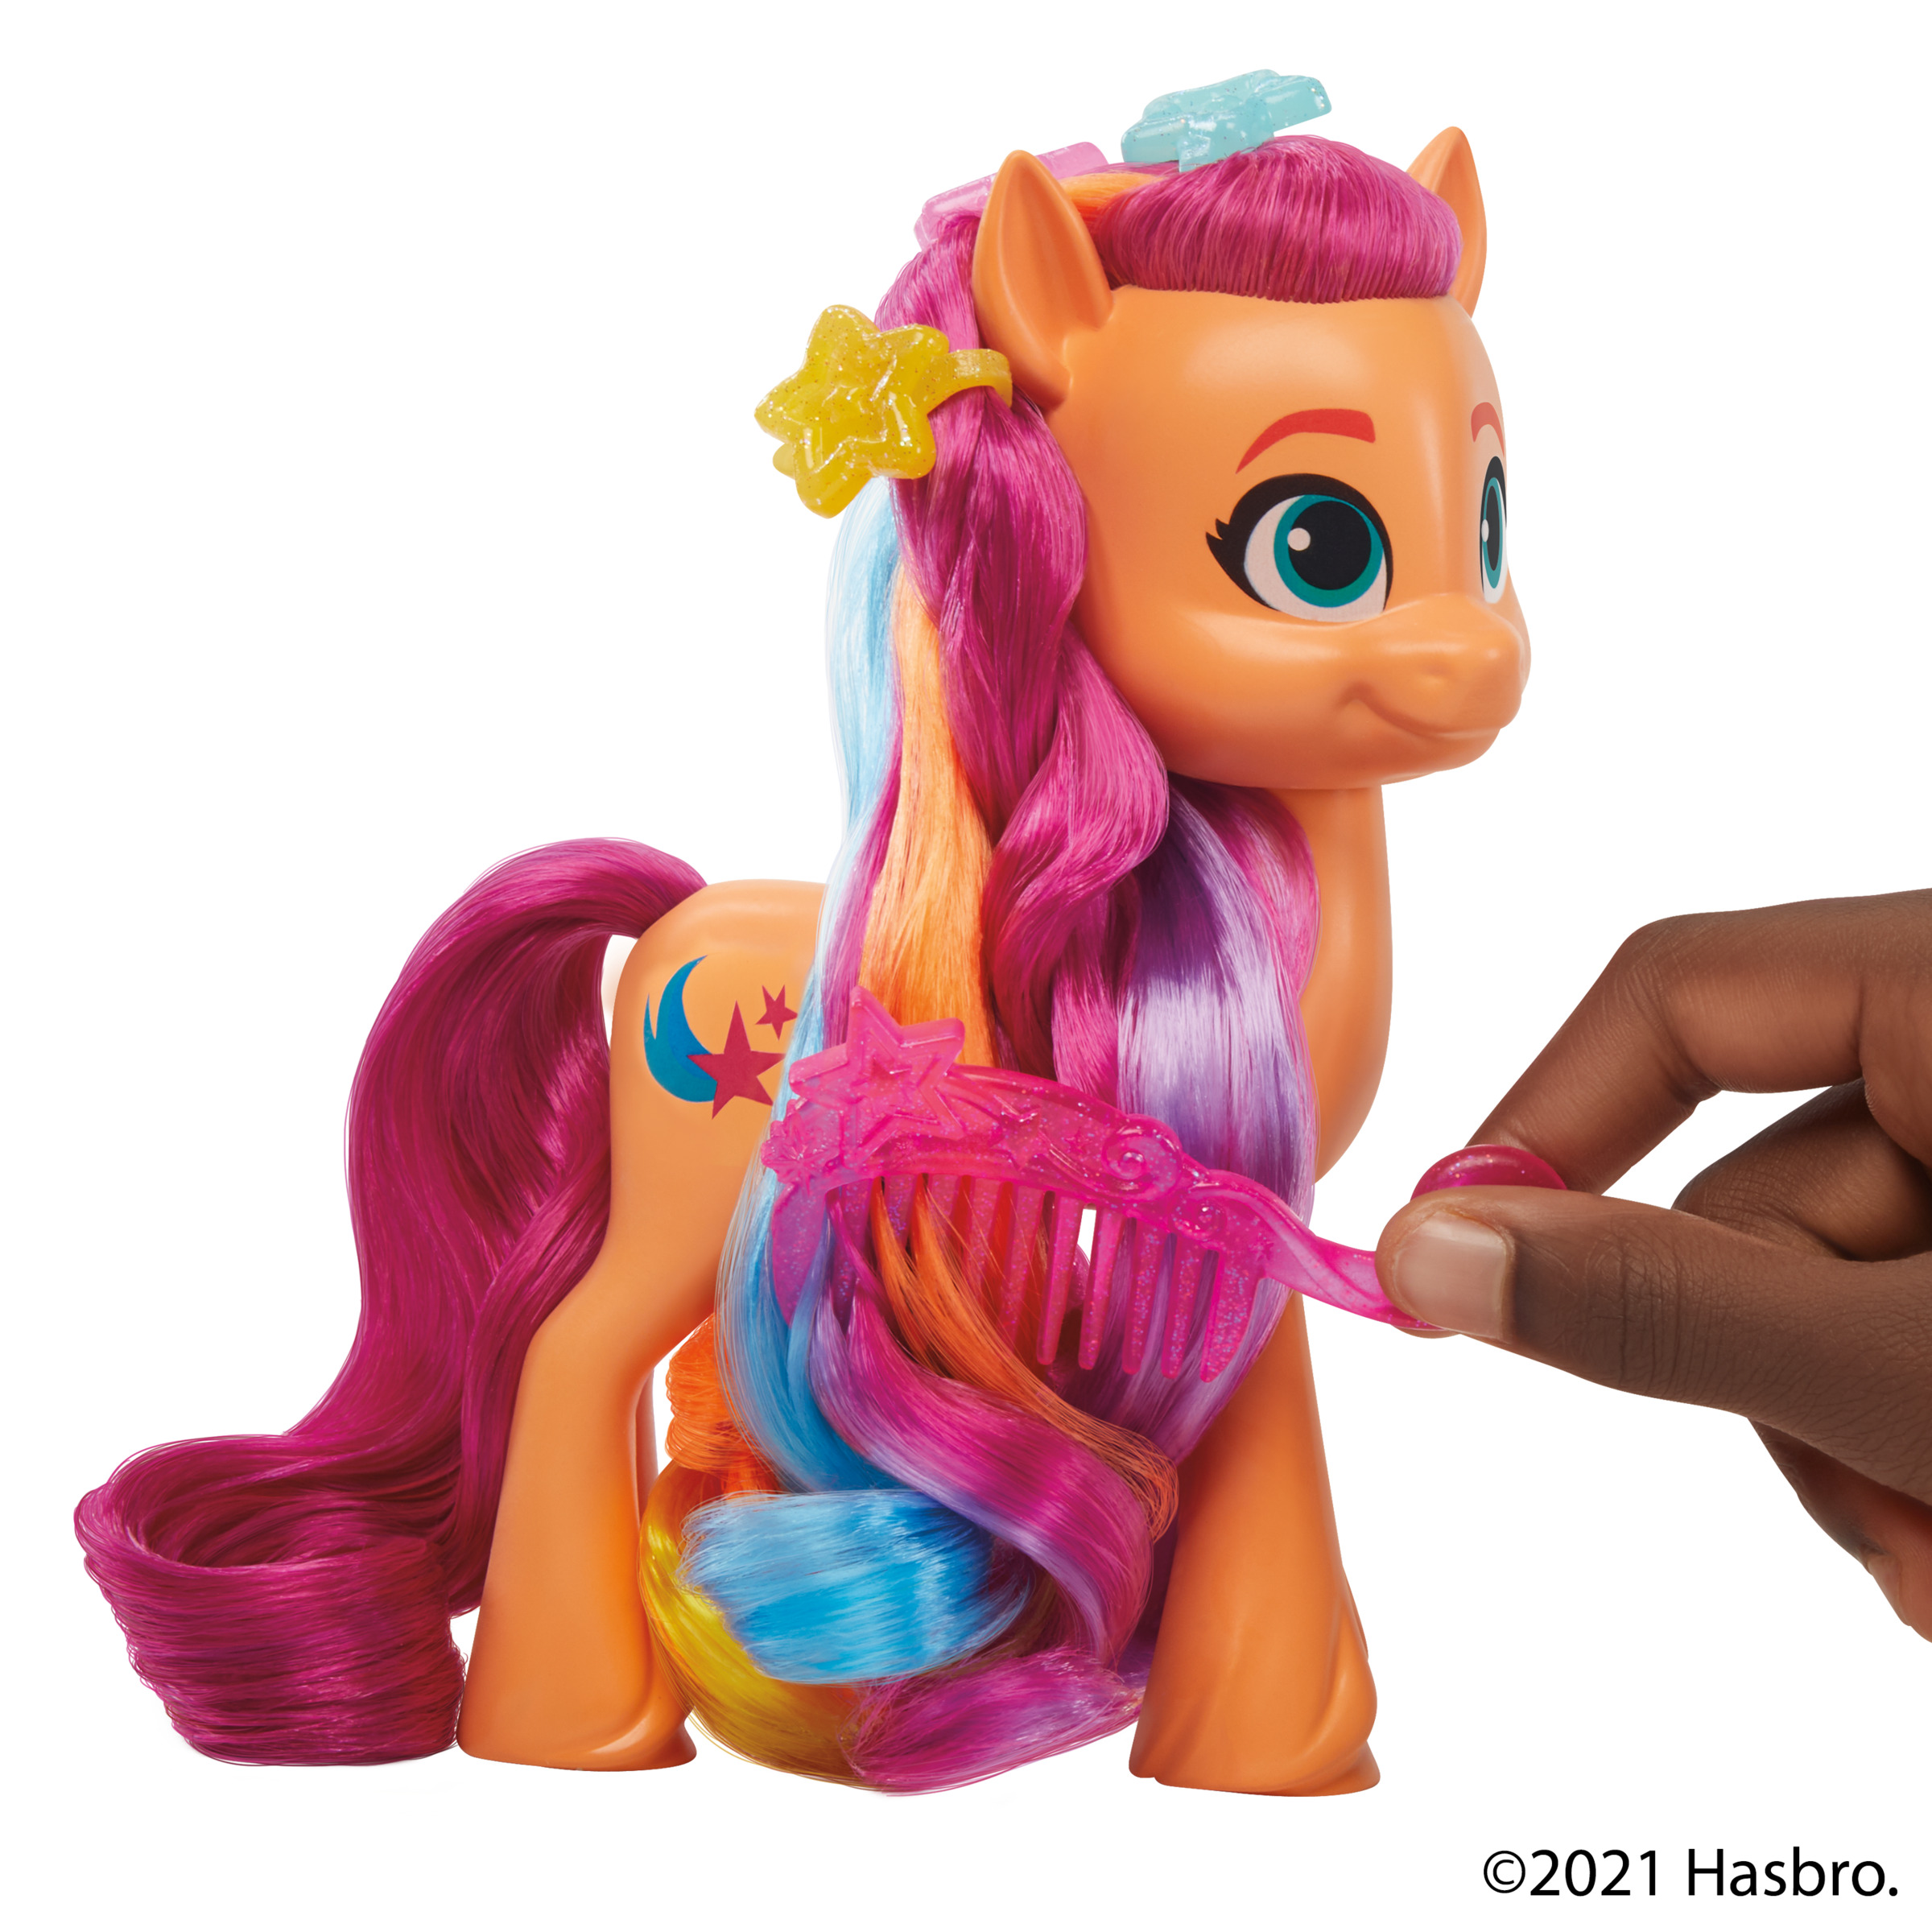 MY LITTLE New PONY Sunny Peinados Figura My - A Pony: Starscout Little mágicos Generation